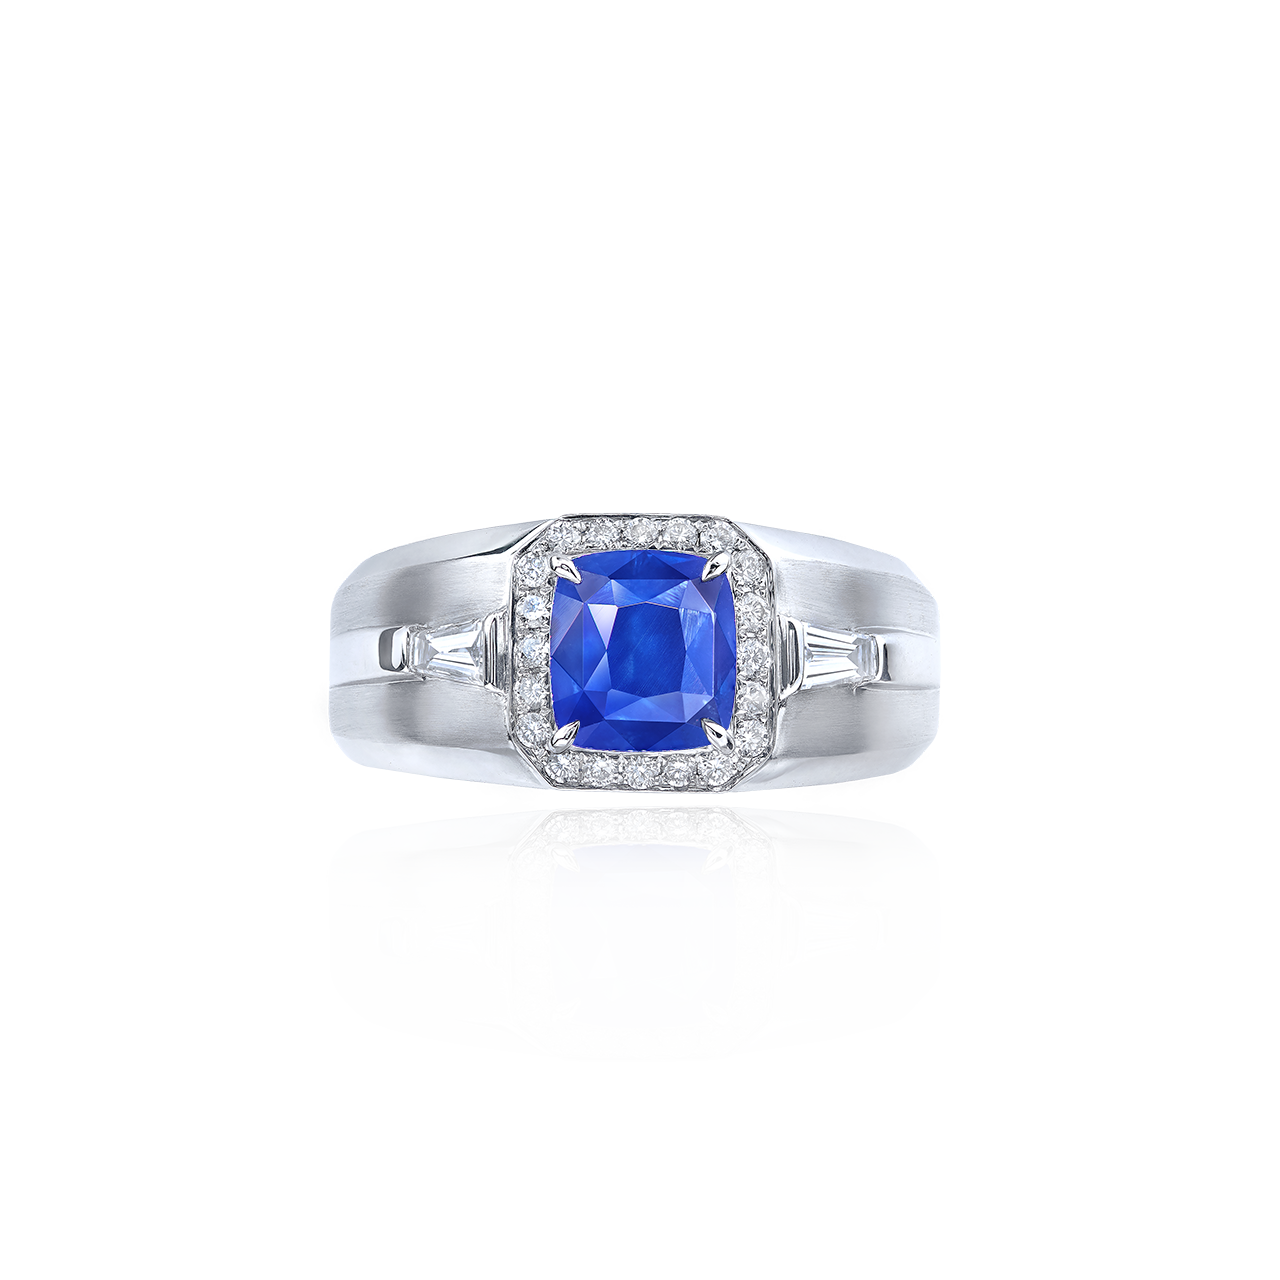 2.17克拉 斯里蘭卡天然無燒藍寶男戒
Blue Sapphire from Sri Lanka 
and Diamond Ring